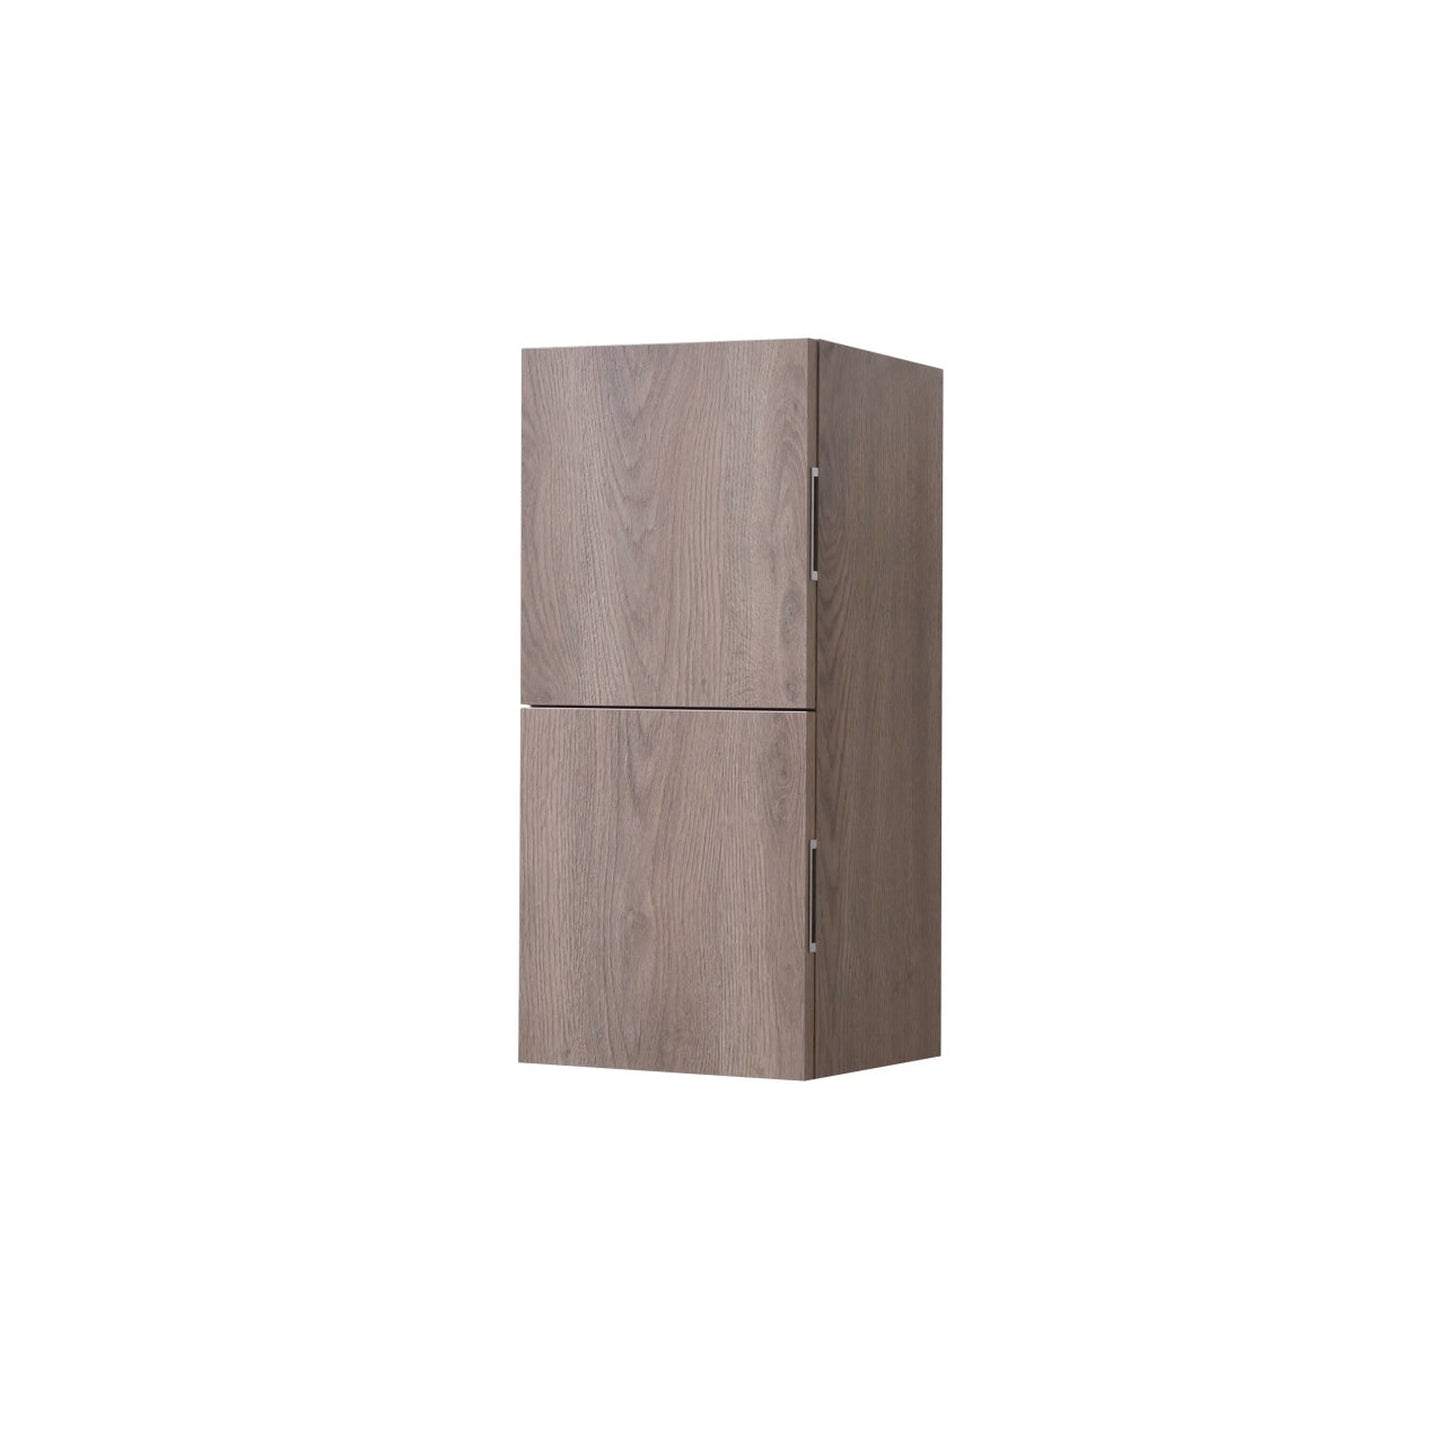 KubeBath Bliss 12"x 28" Butternut Wood Veneer Linen Side Cabinet With Two Storage Areas